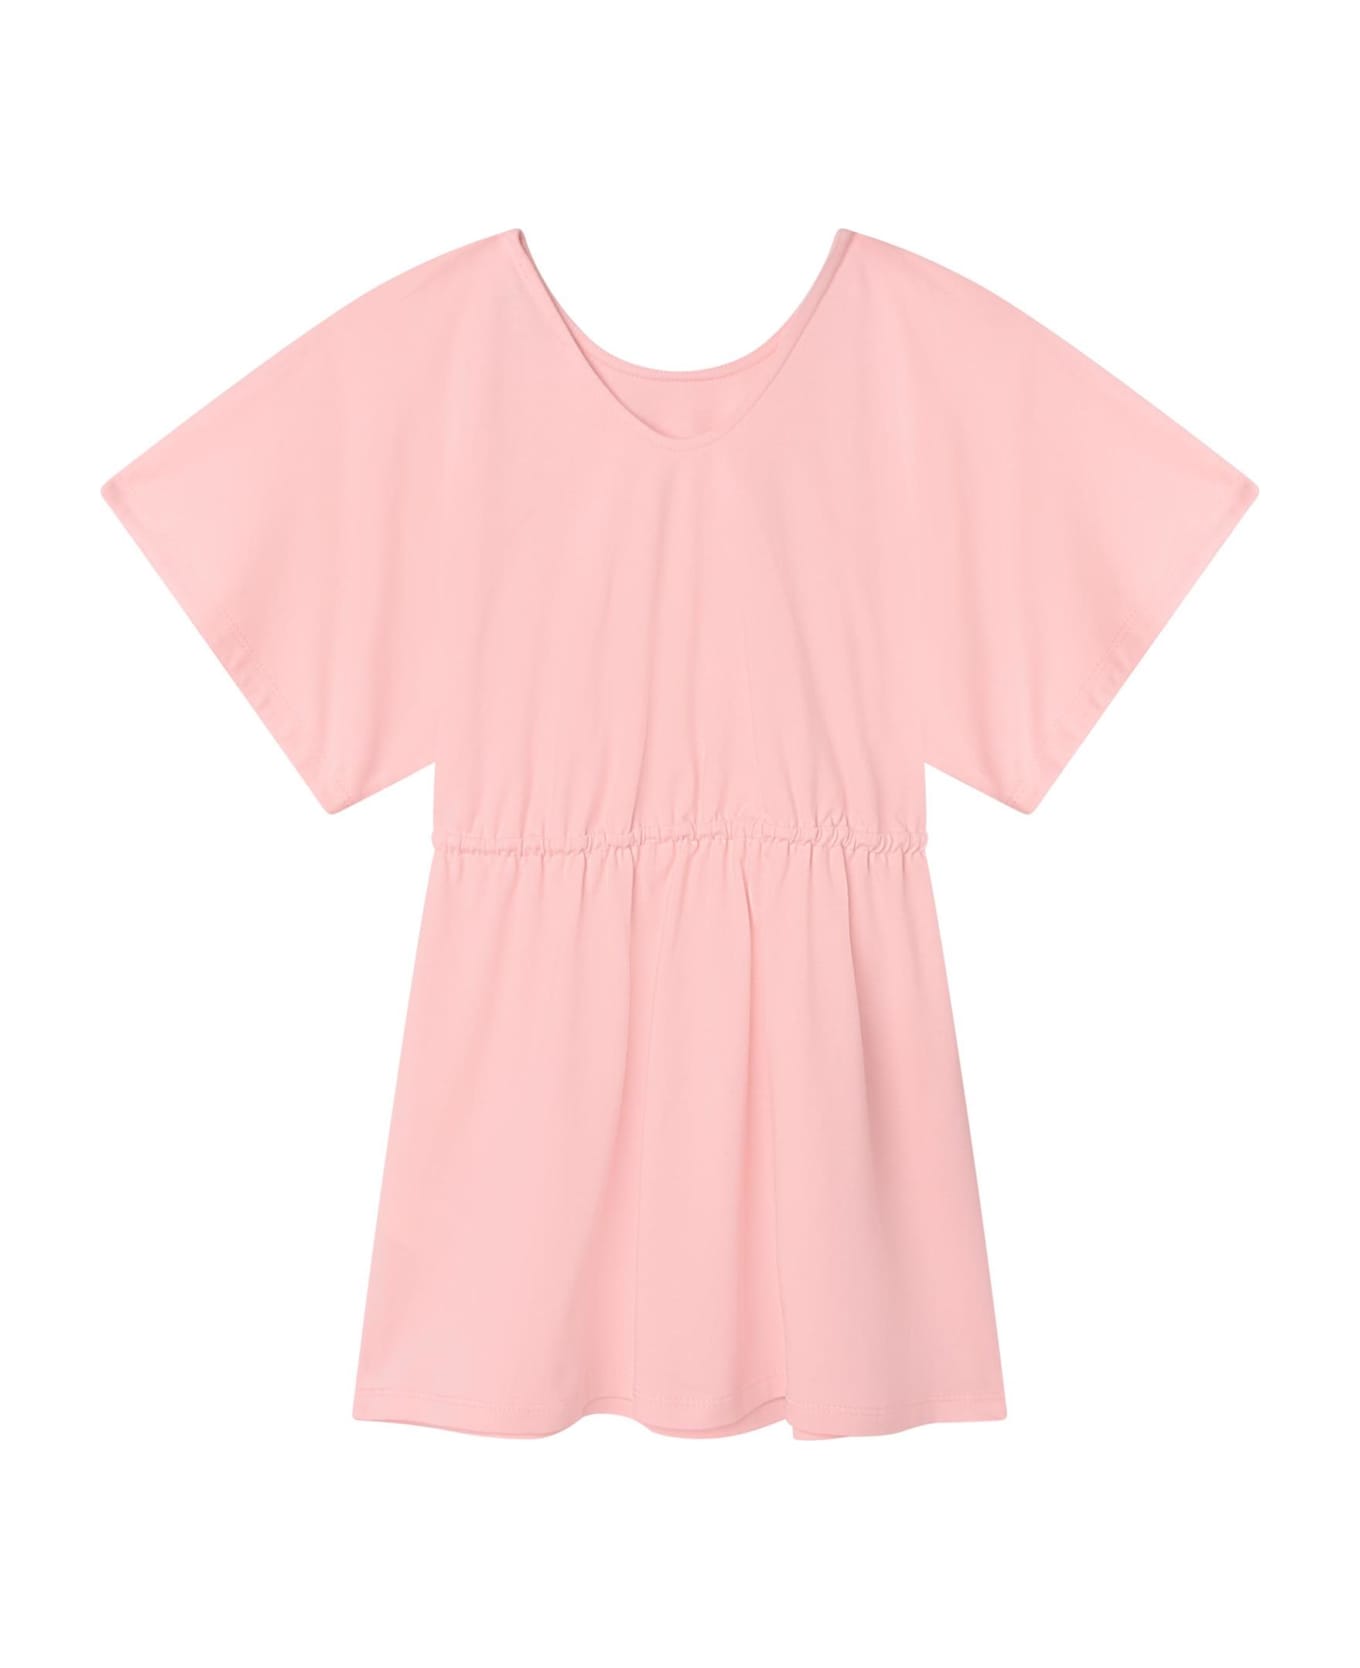 Kenzo Kids Friends T-shirt Model Dress With Print - Pink